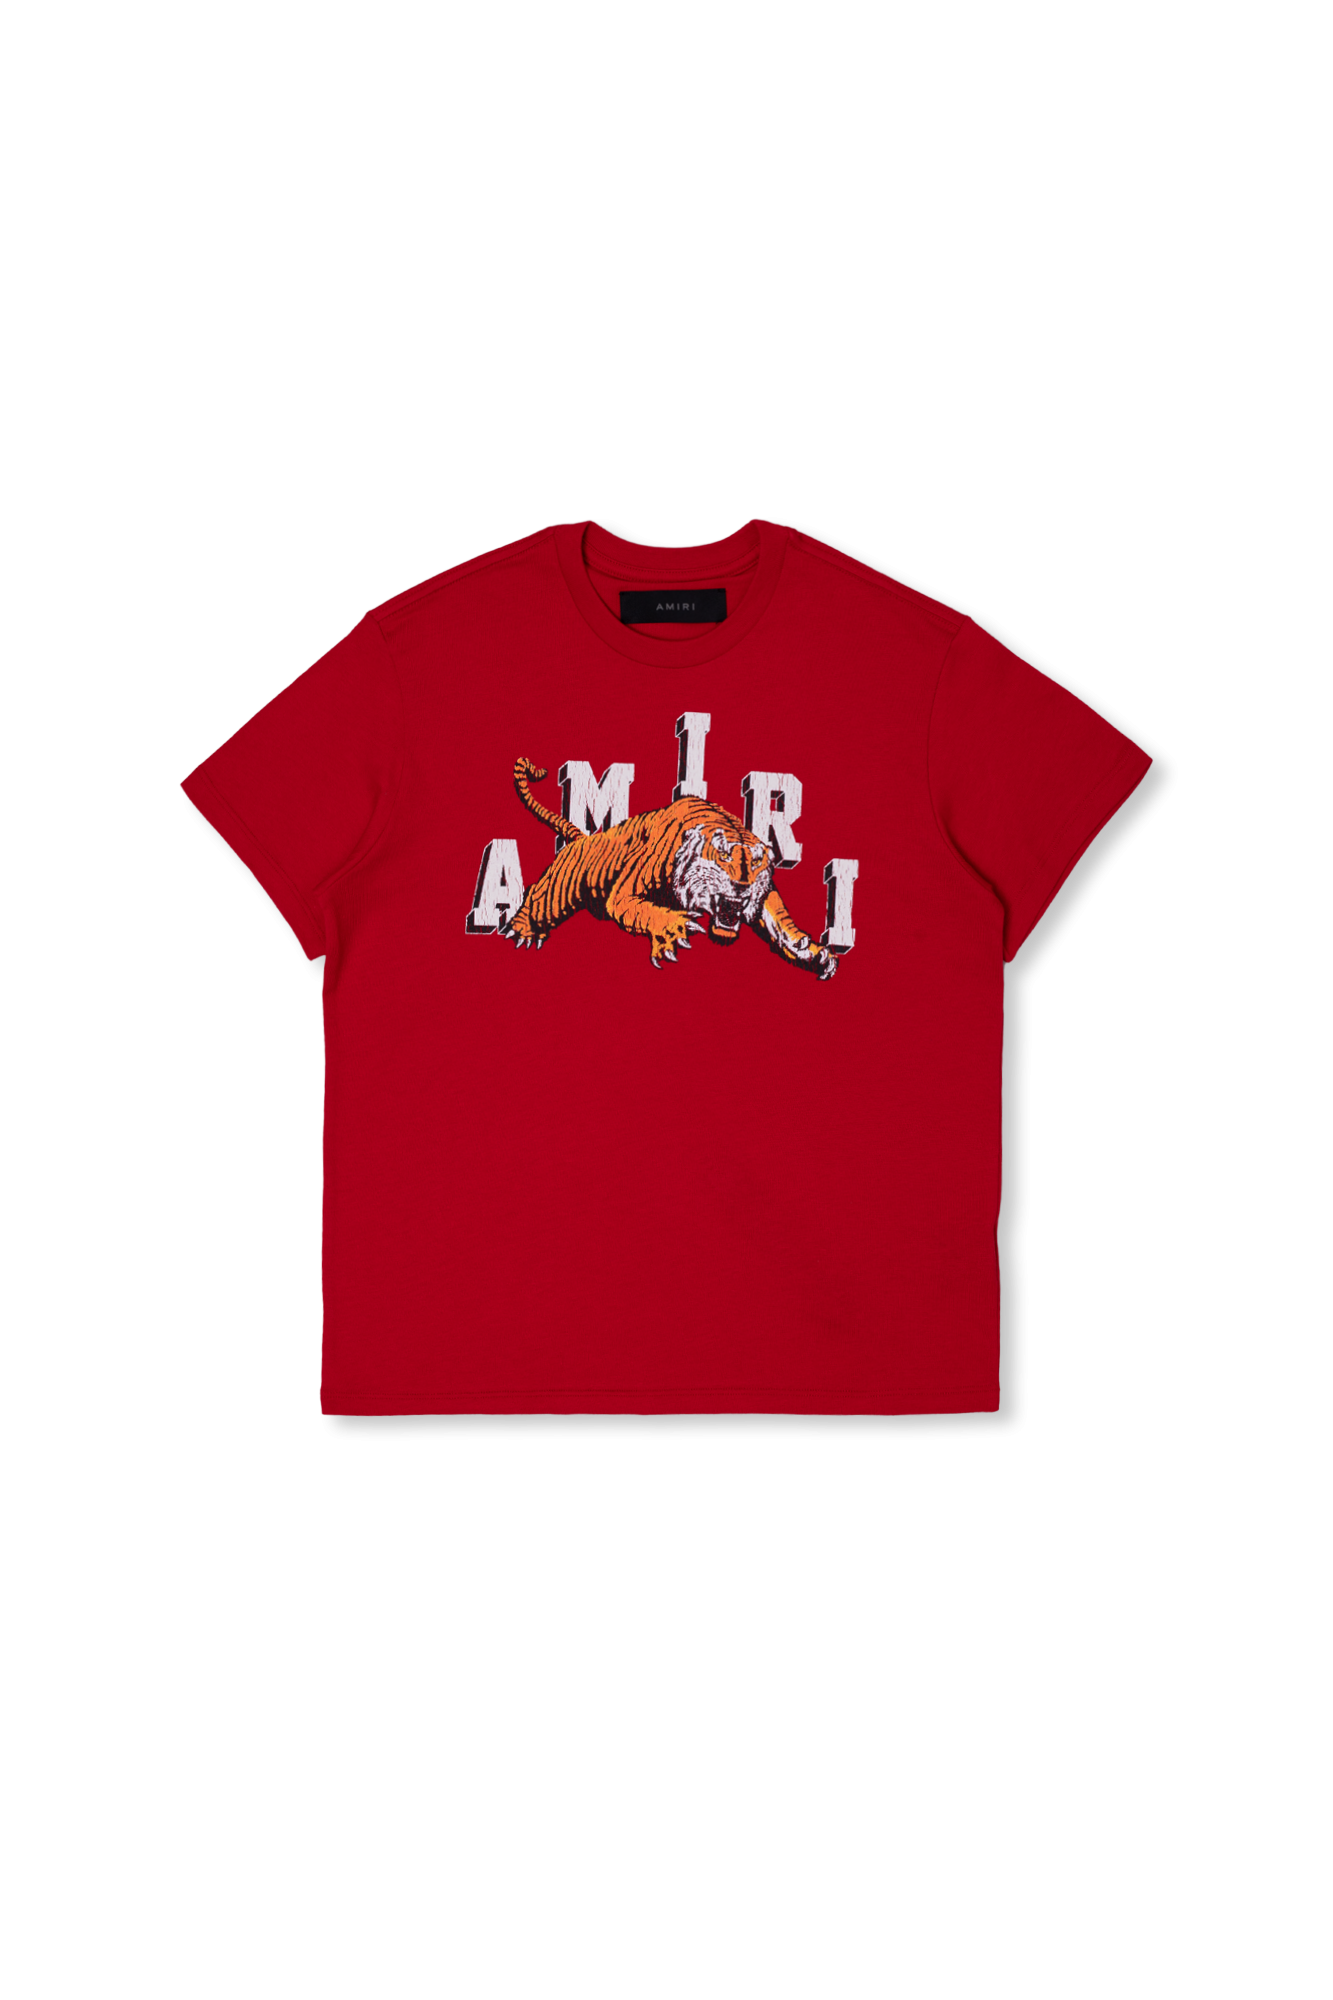 Red T-shirt with logo Amiri Kids - Vitkac TW